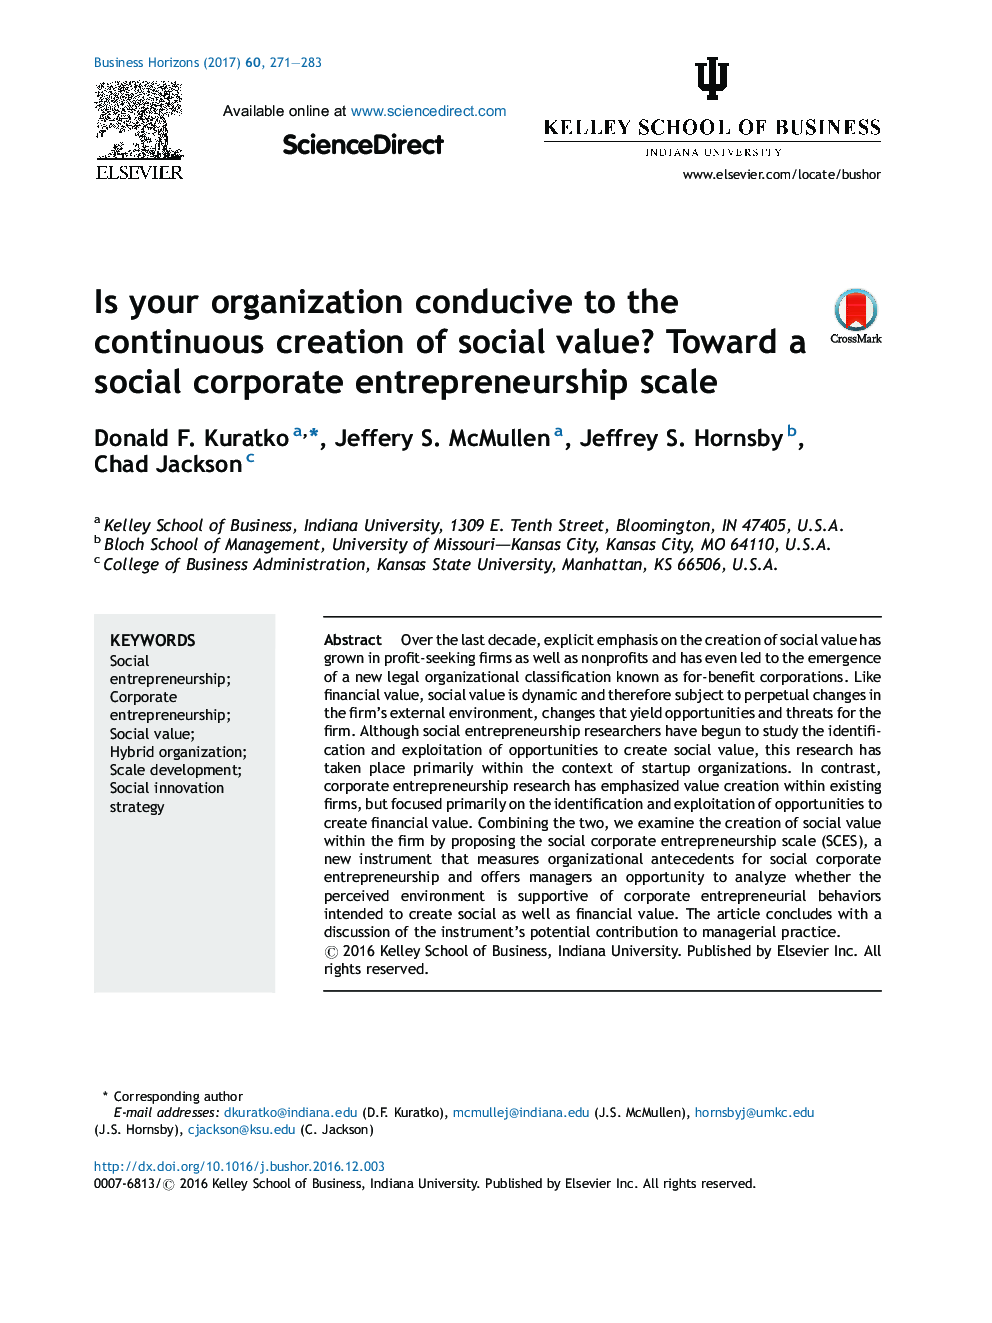 Is your organization conducive to the continuous creation of social value? Toward a social corporate entrepreneurship scale